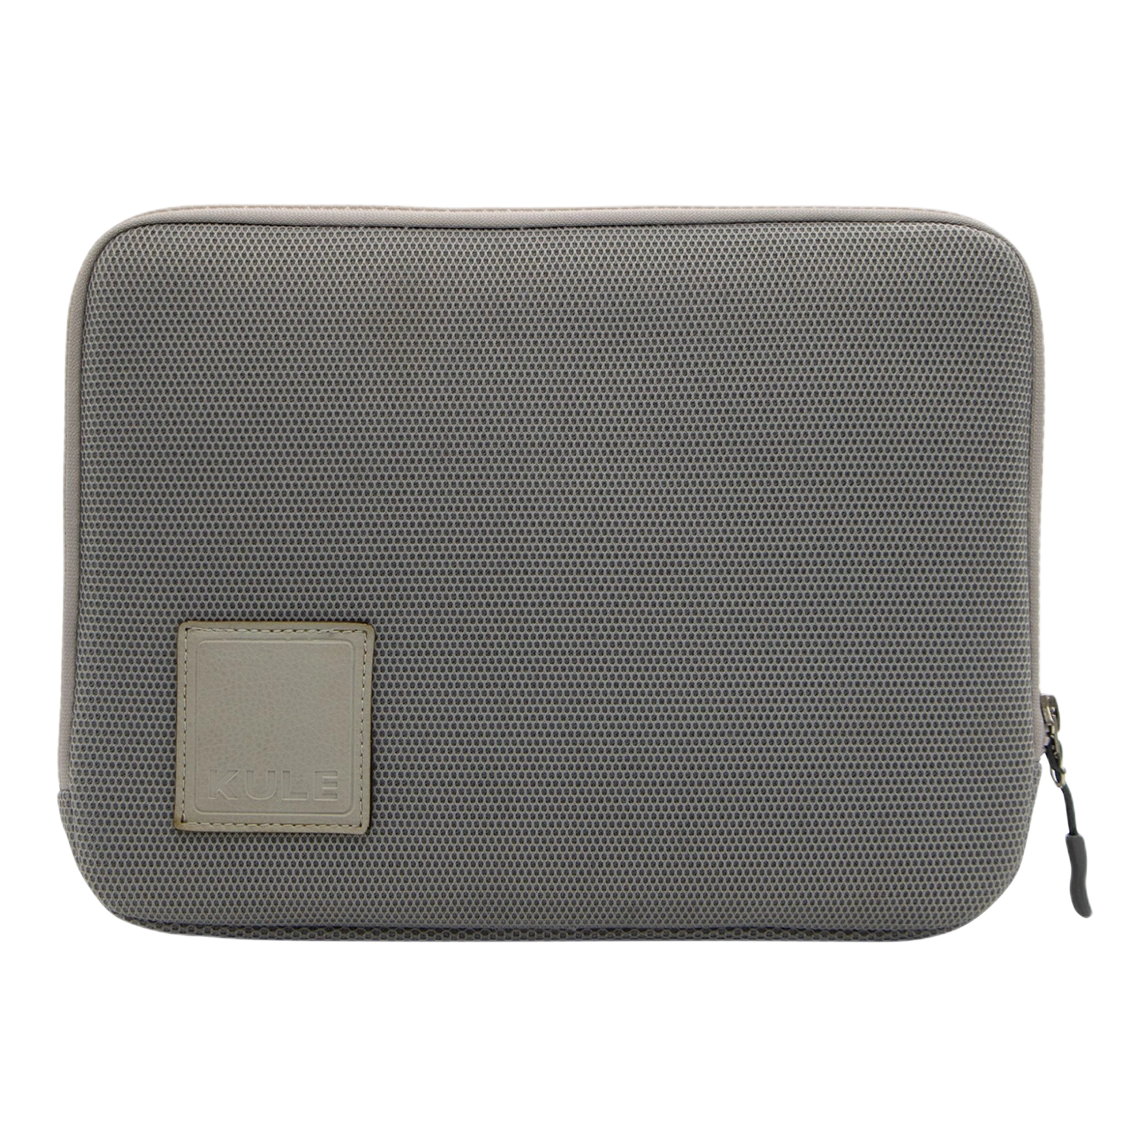 kule-laptop-sleeve-13-inch-kl1350